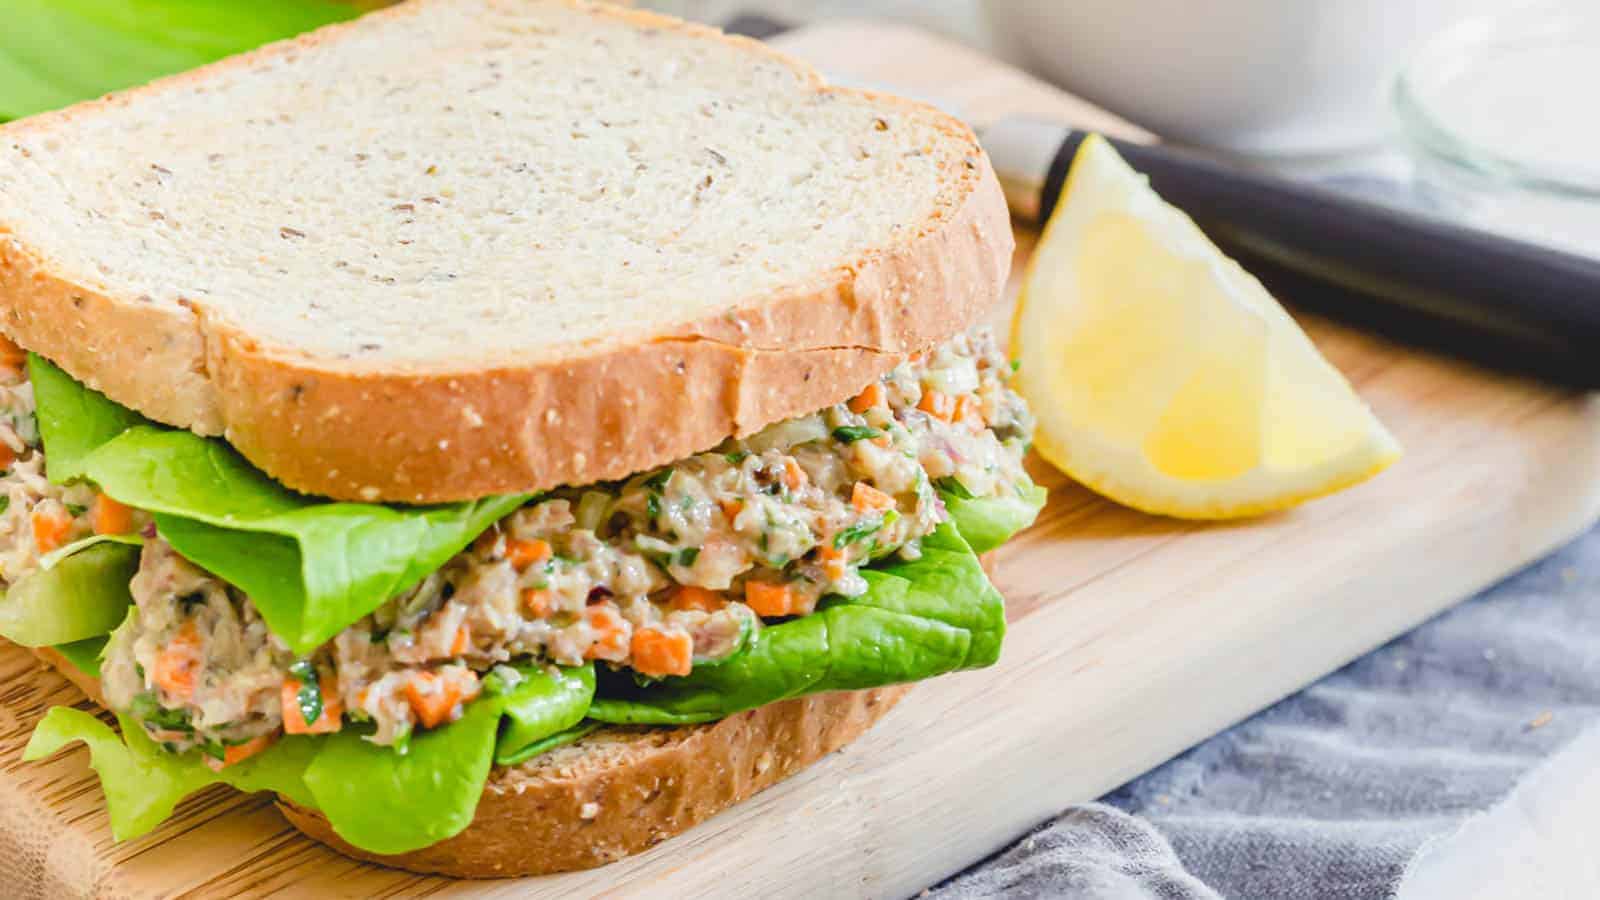 Sardine salad sandwich on a cutting board with a lemon wedge.